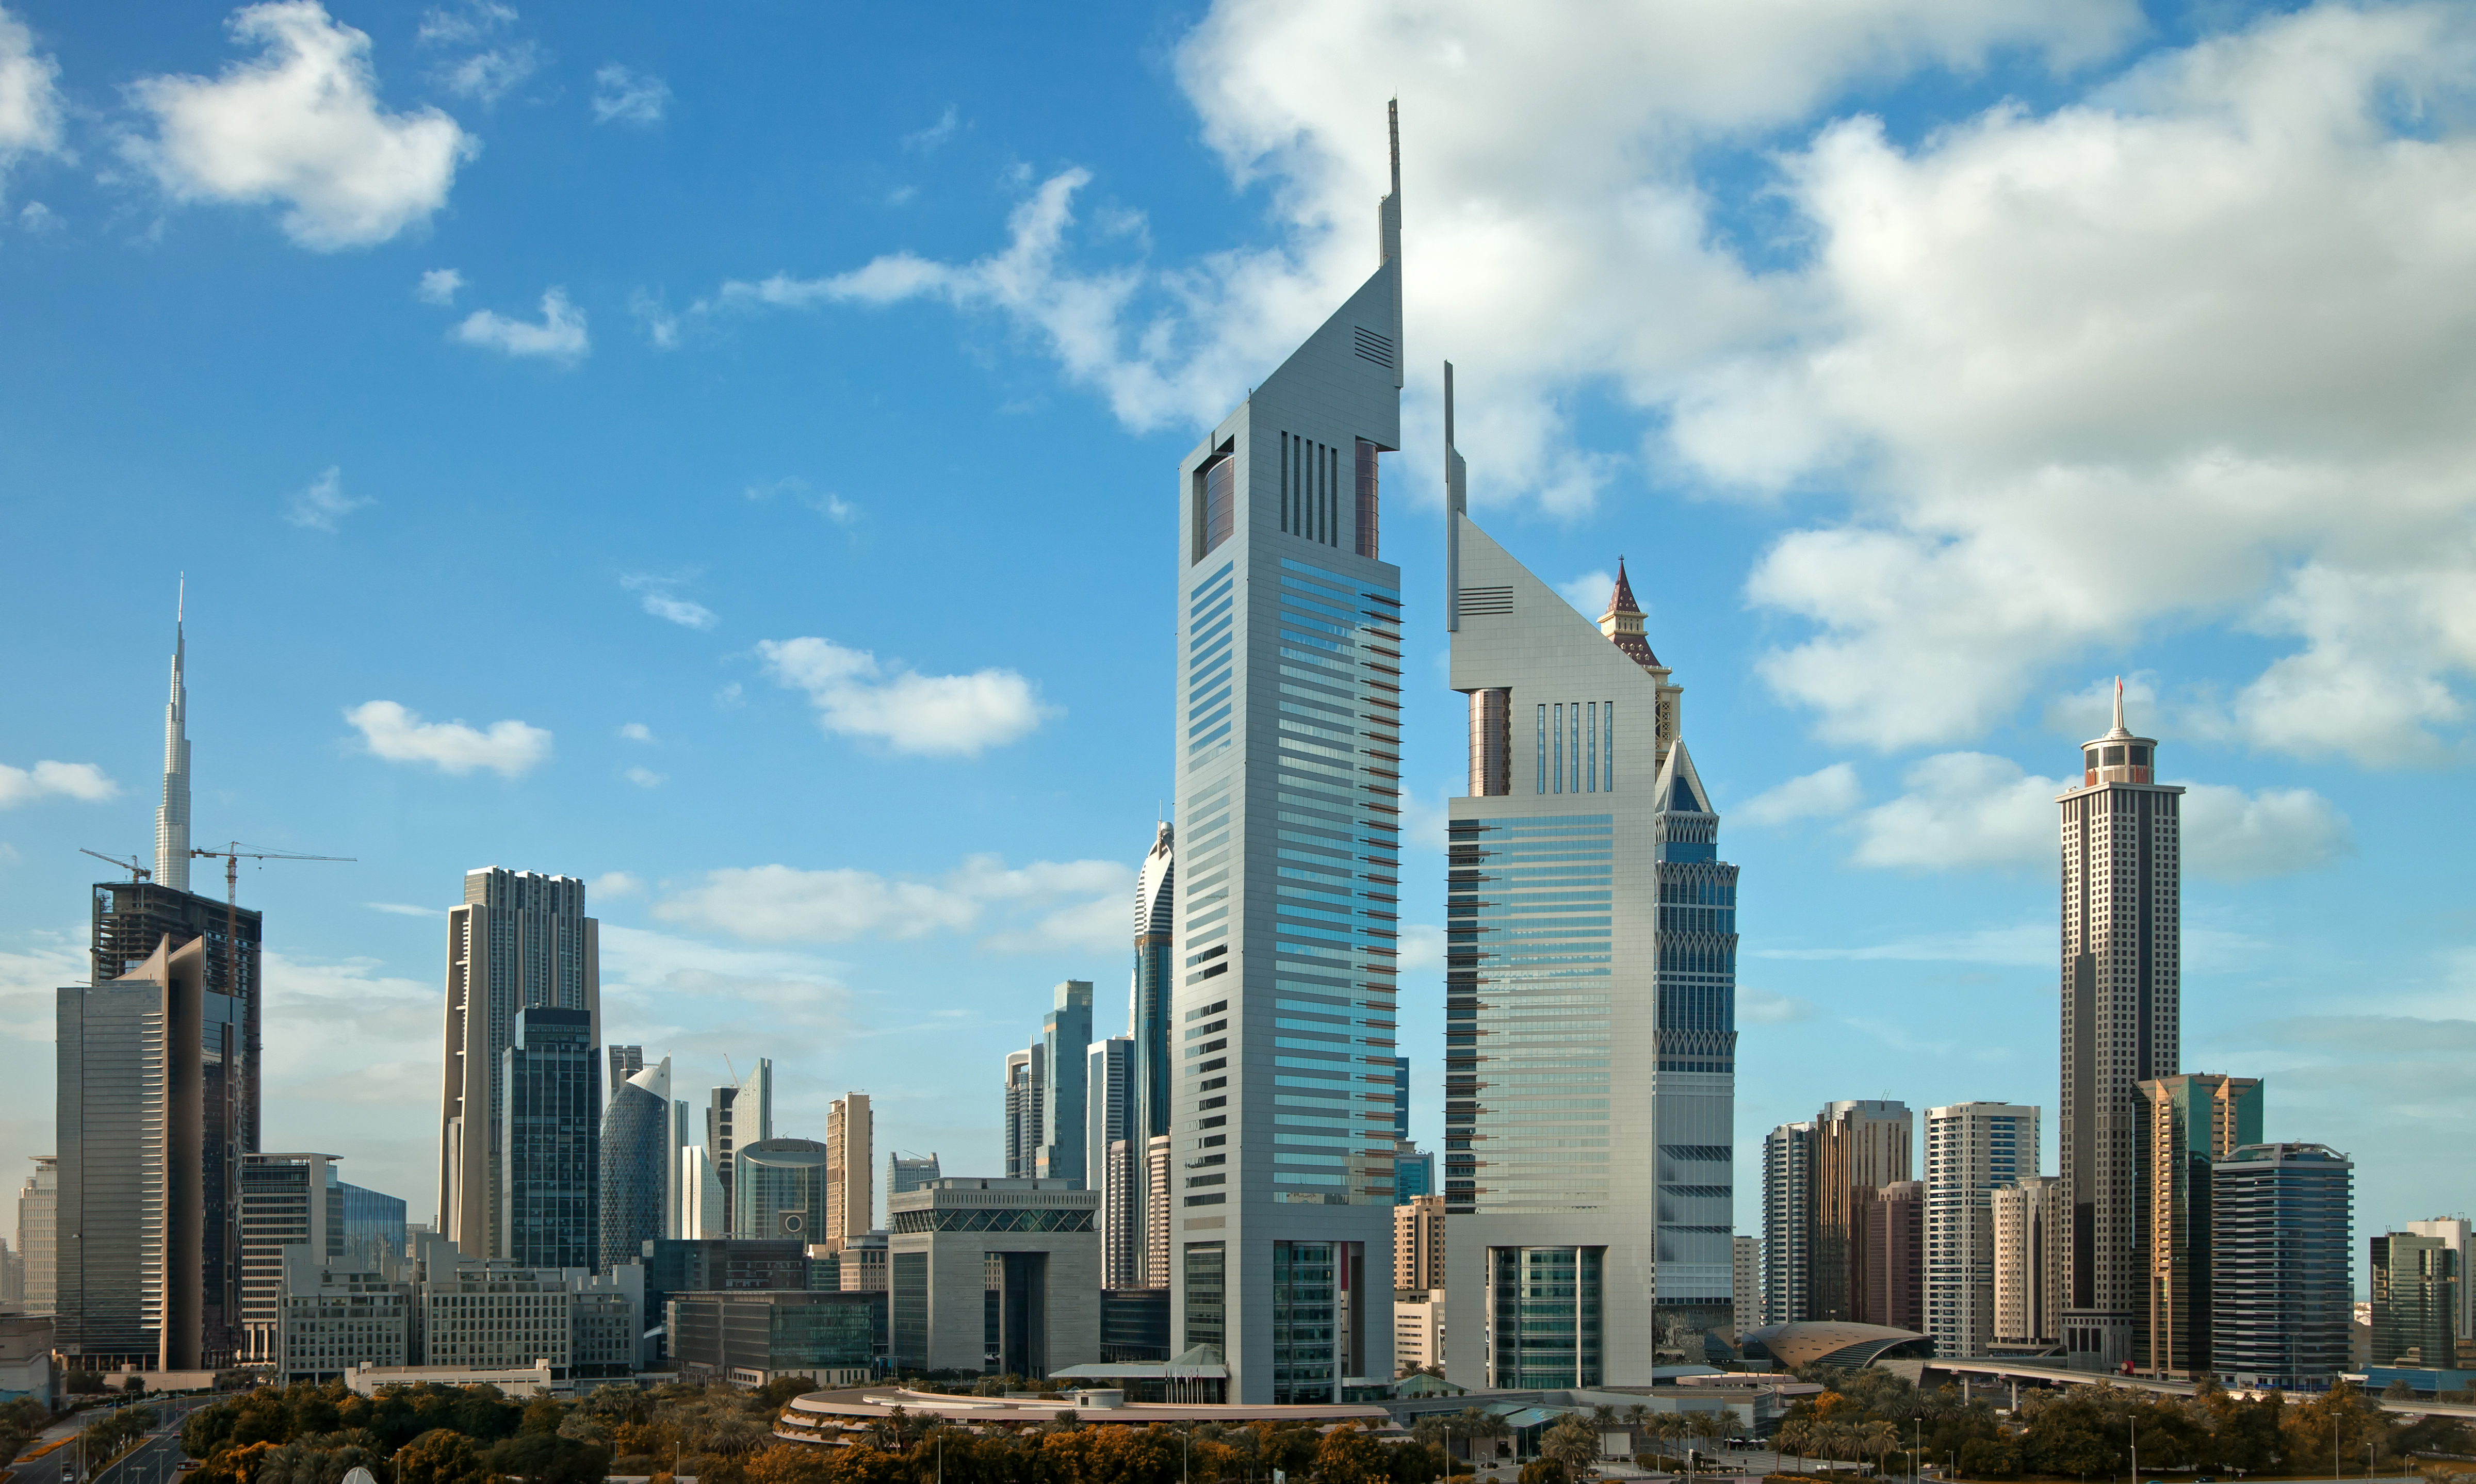 Hd desktop building dubai united arab emirates man made jumeirah emirates tower hotel download free picture